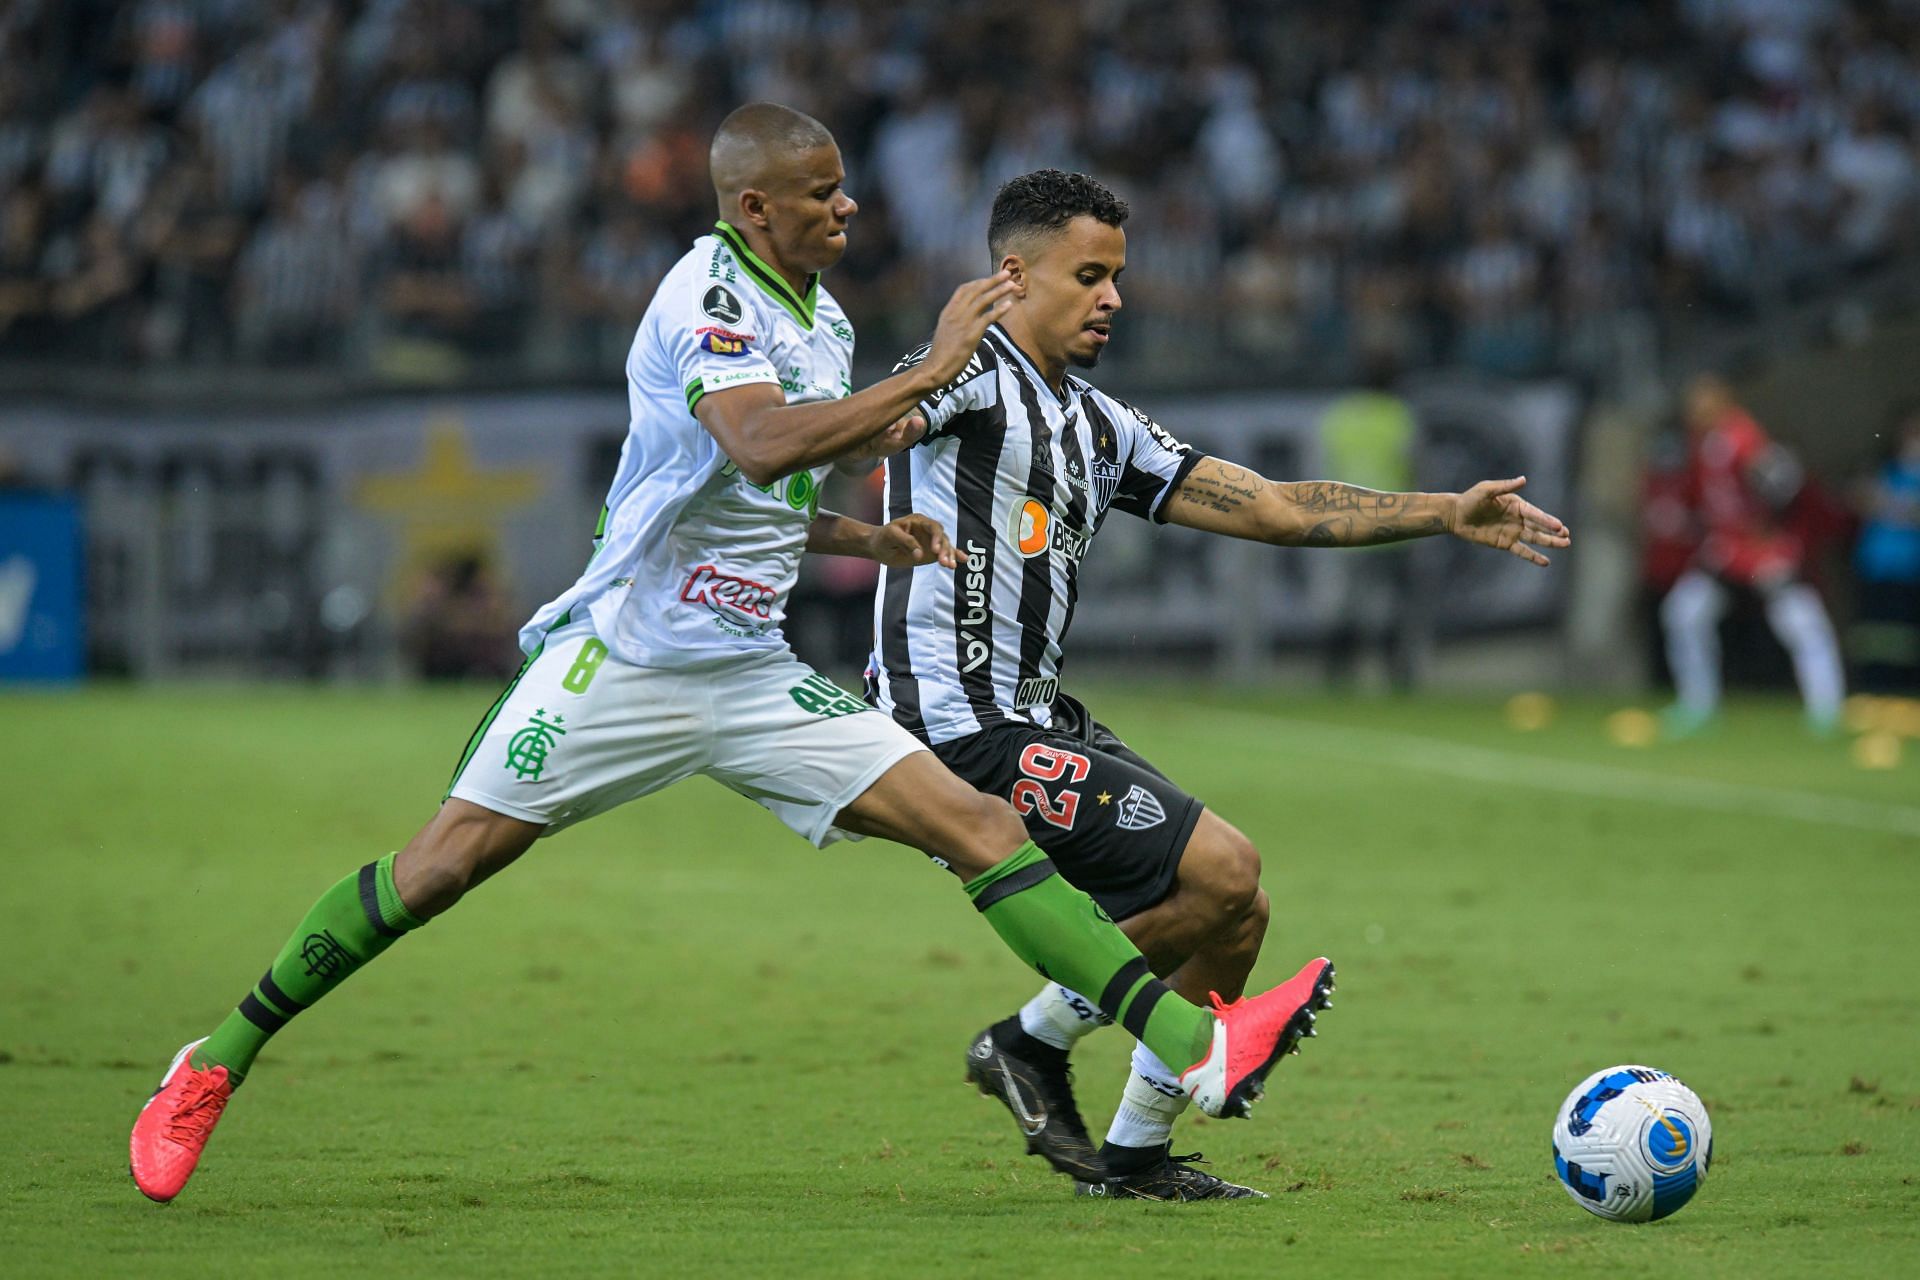 America Mineiro meet Botafogo in the Copa do Brasil round of 16 on Thursday